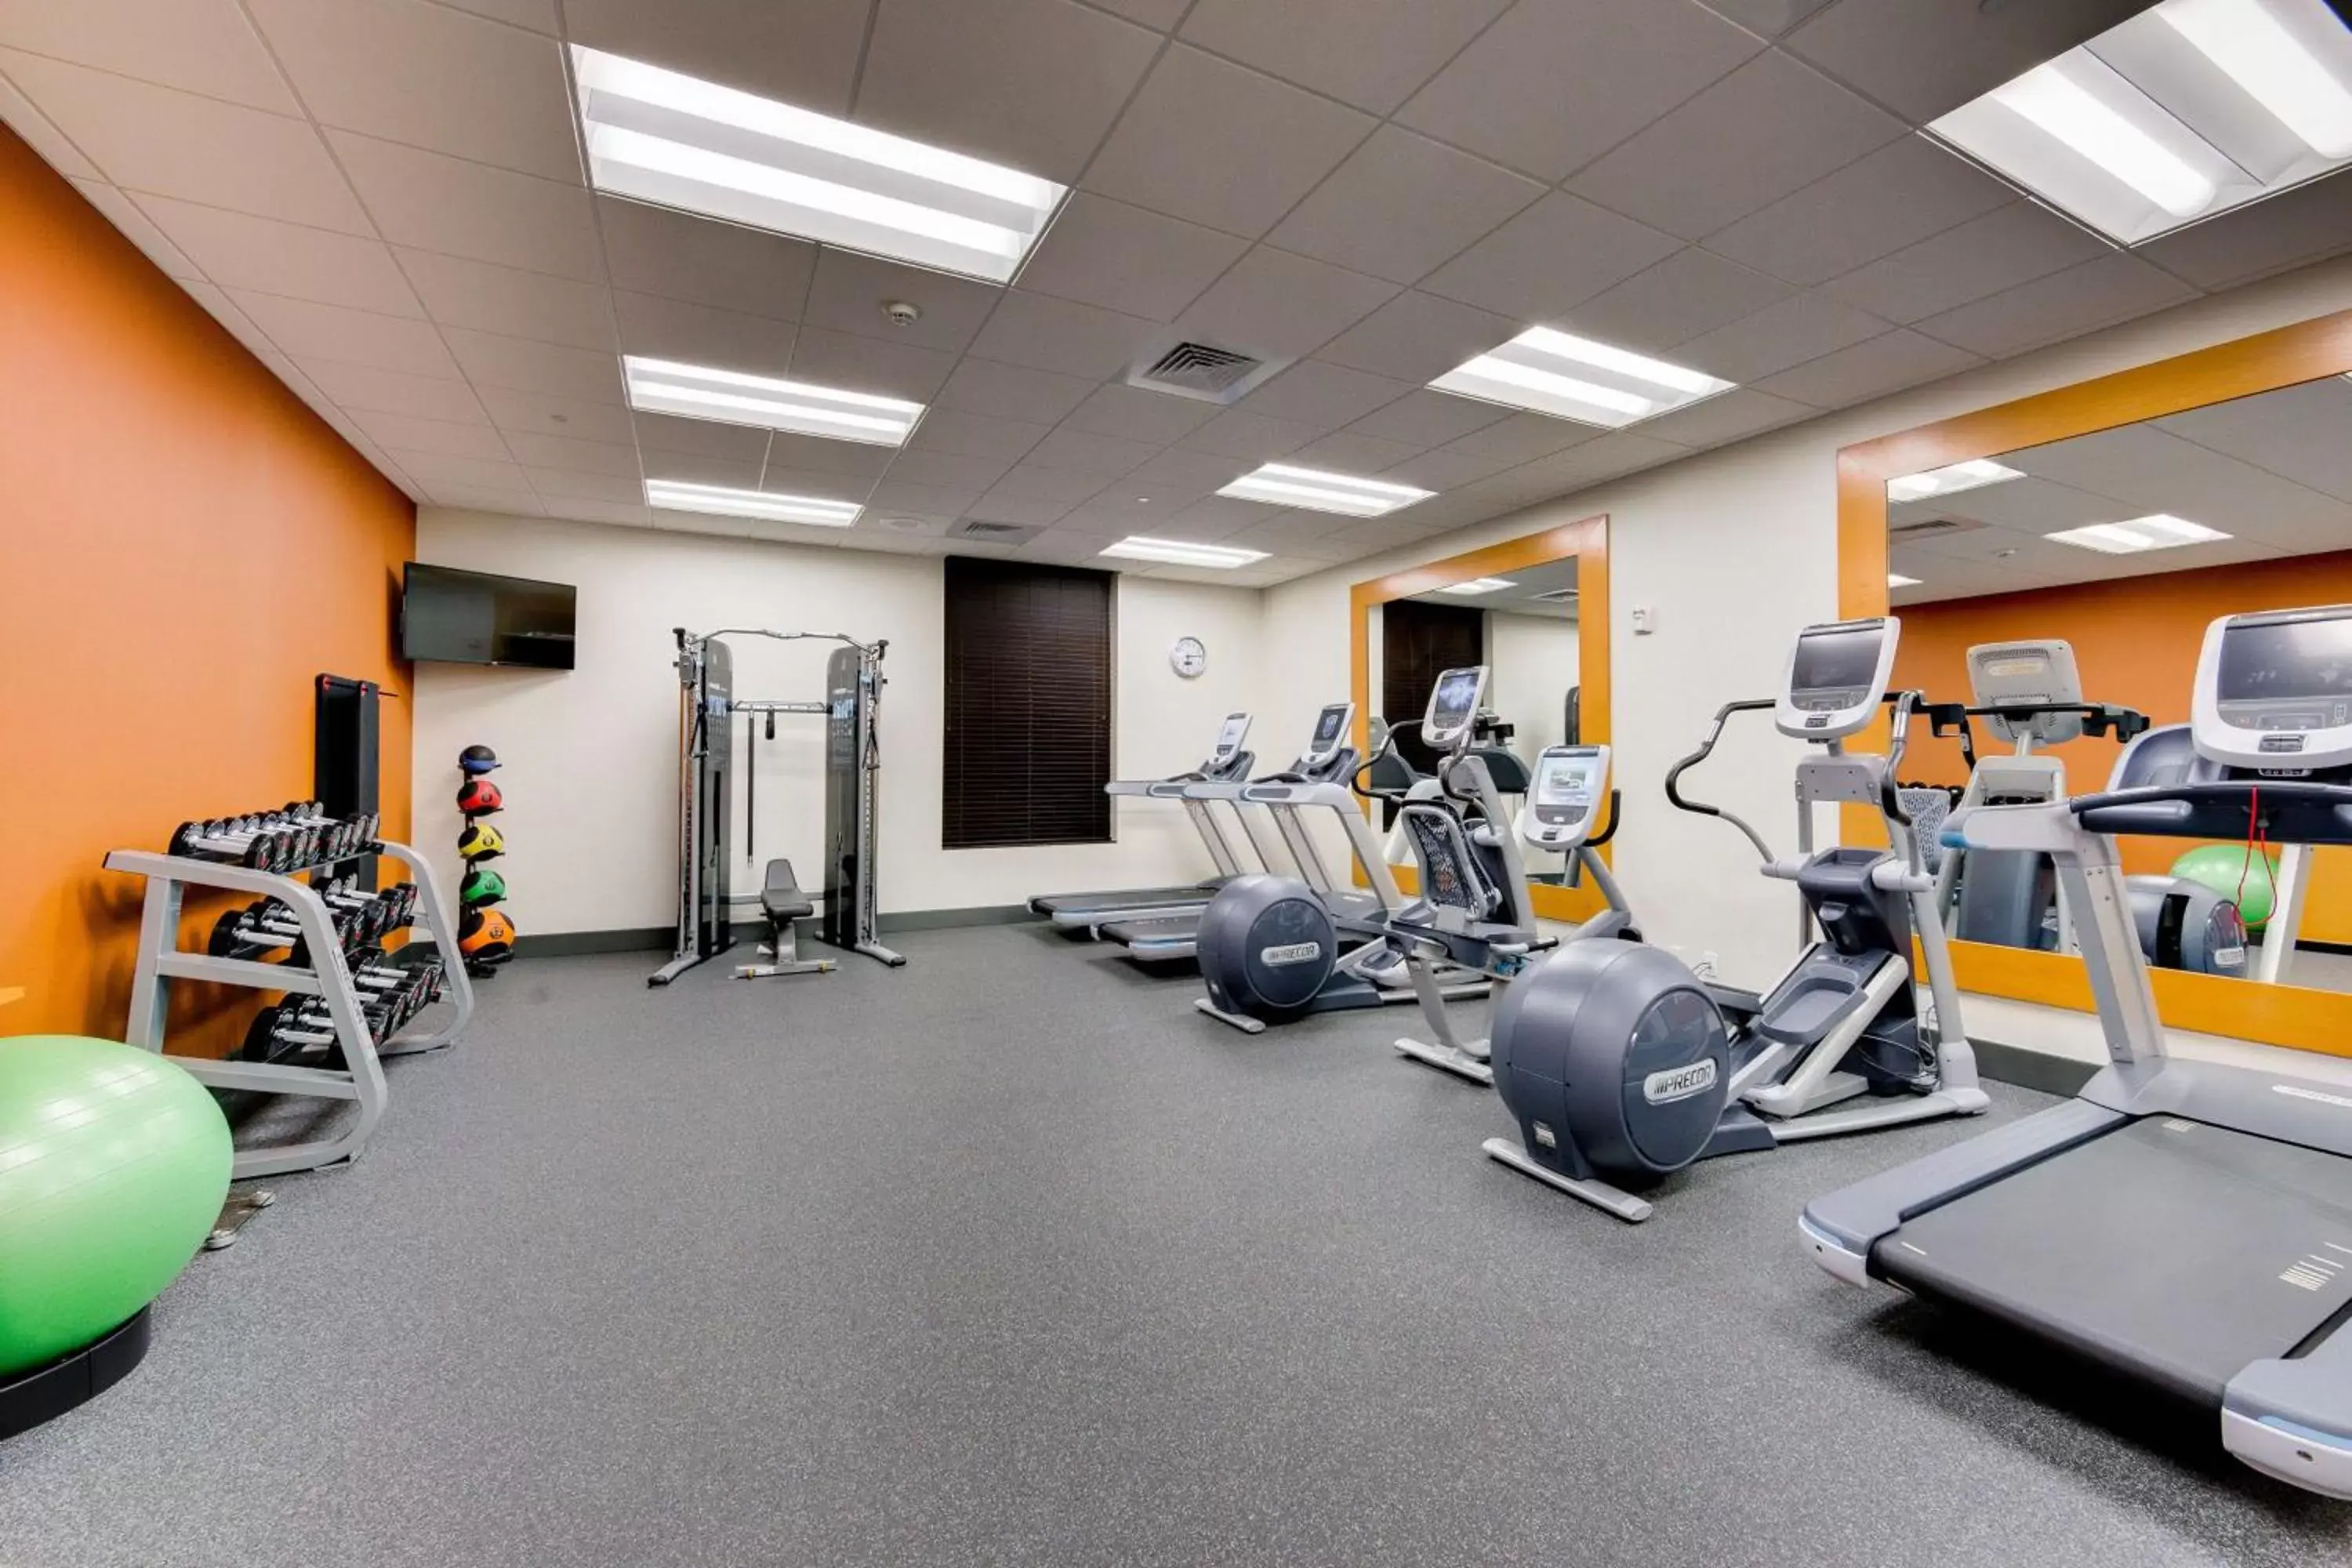 Fitness centre/facilities, Fitness Center/Facilities in Hilton Garden Inn North Houston Spring